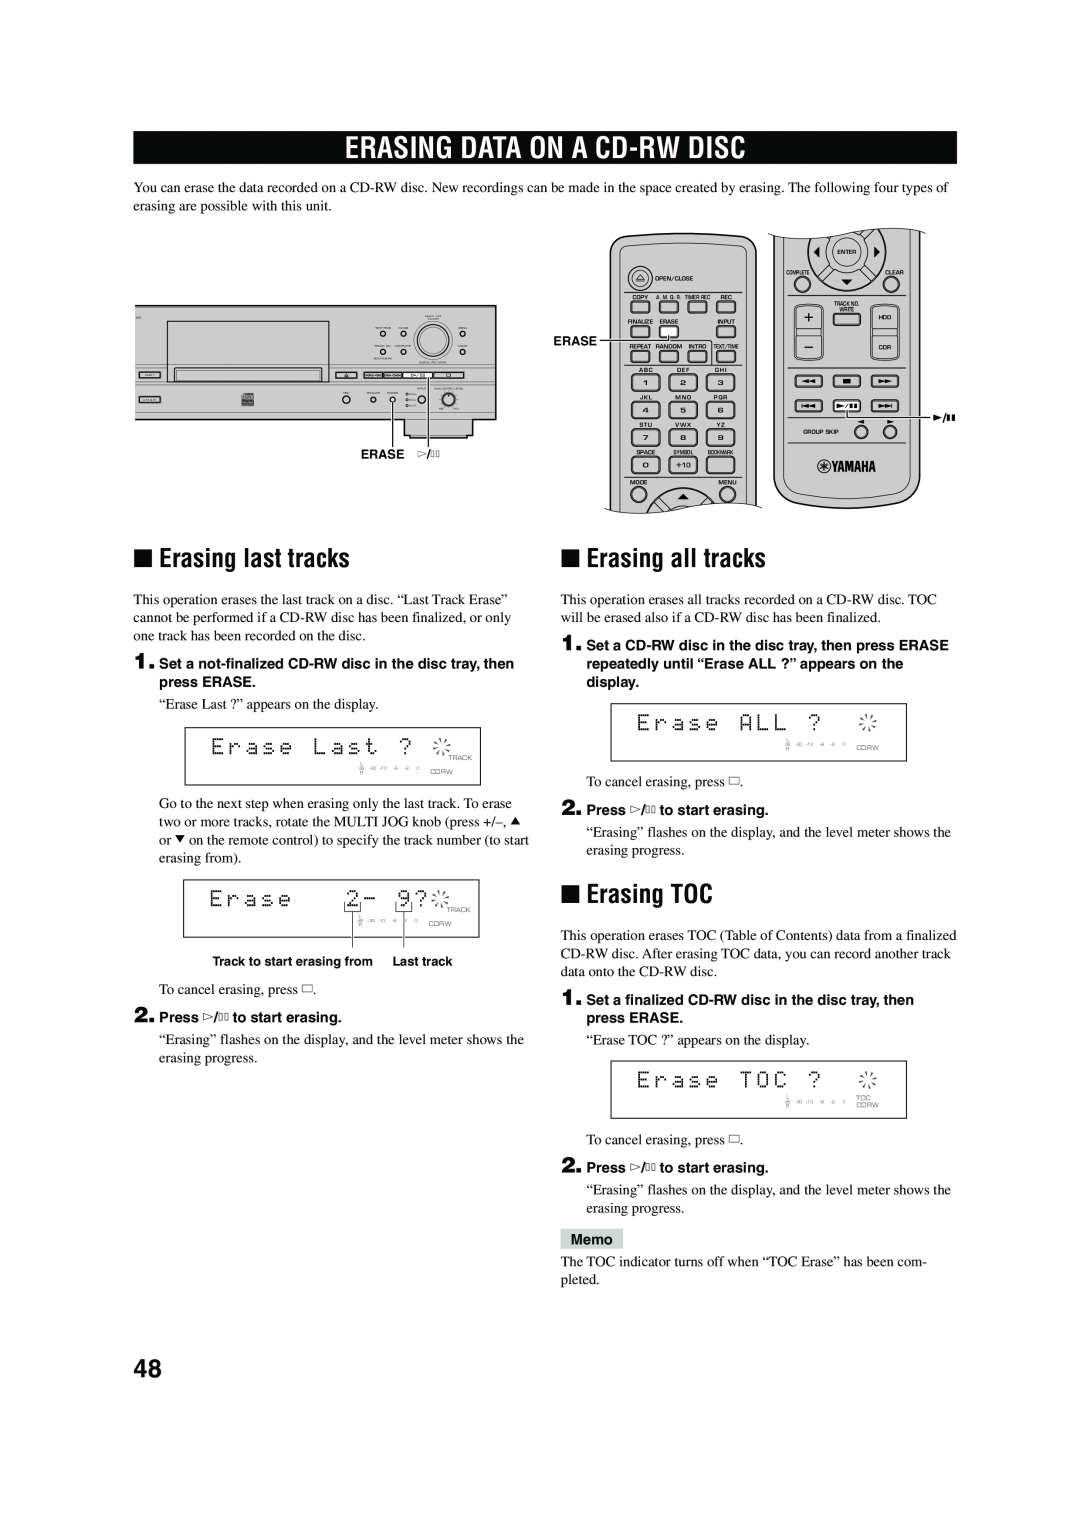 Yamaha CDR-HD 1500 owner manual Erasing Data On A Cd-Rwdisc, Erasing last tracks, Erasing all tracks, Erasing TOC 